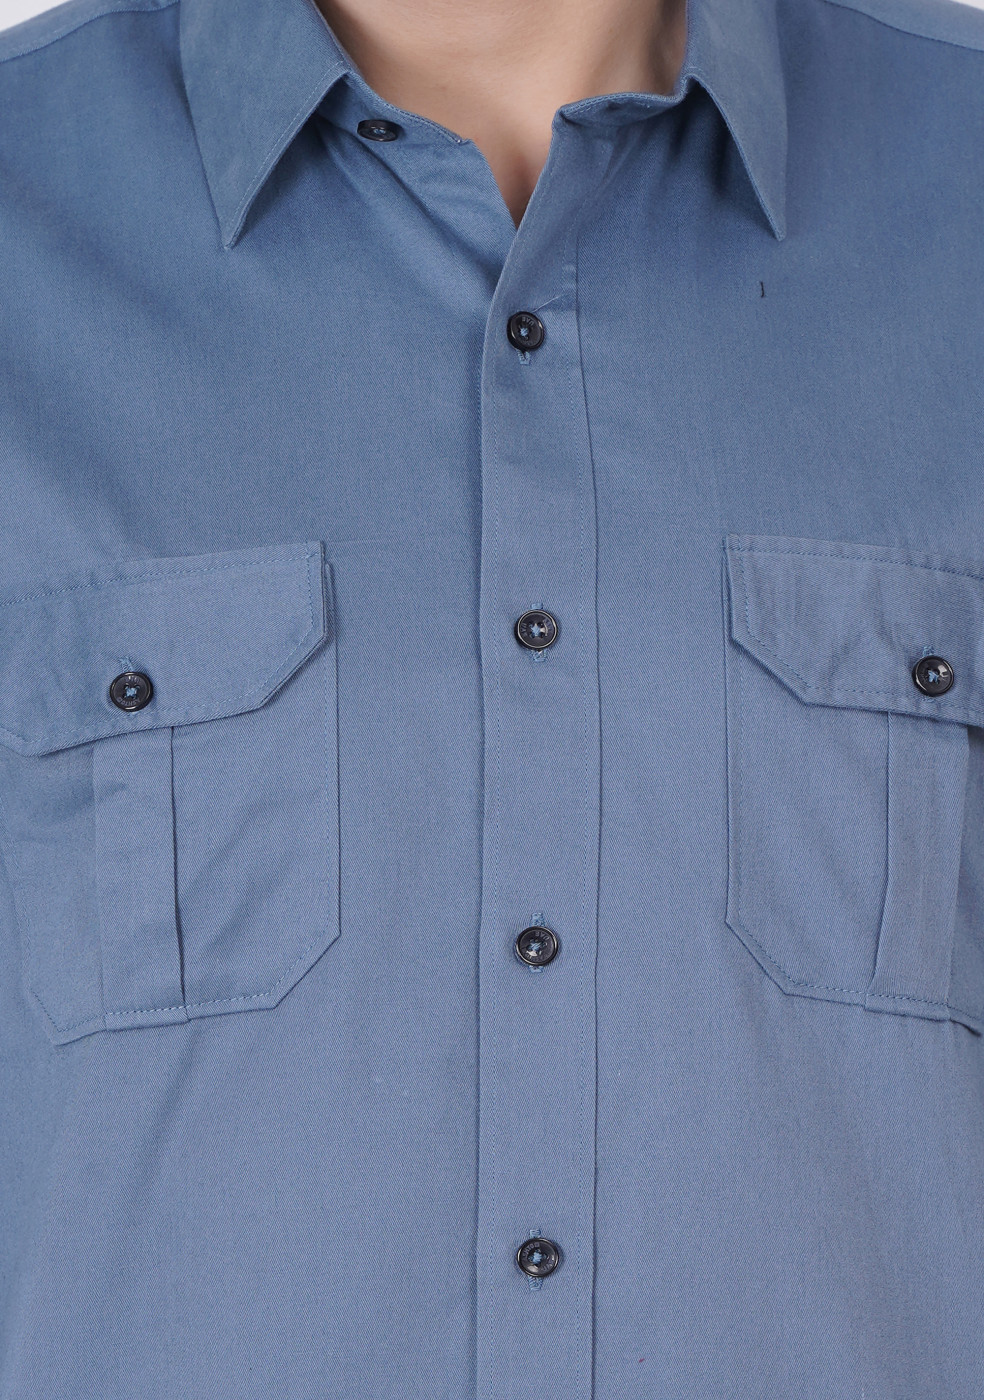 Men Shirt Double Pocket (PACK OF 2)